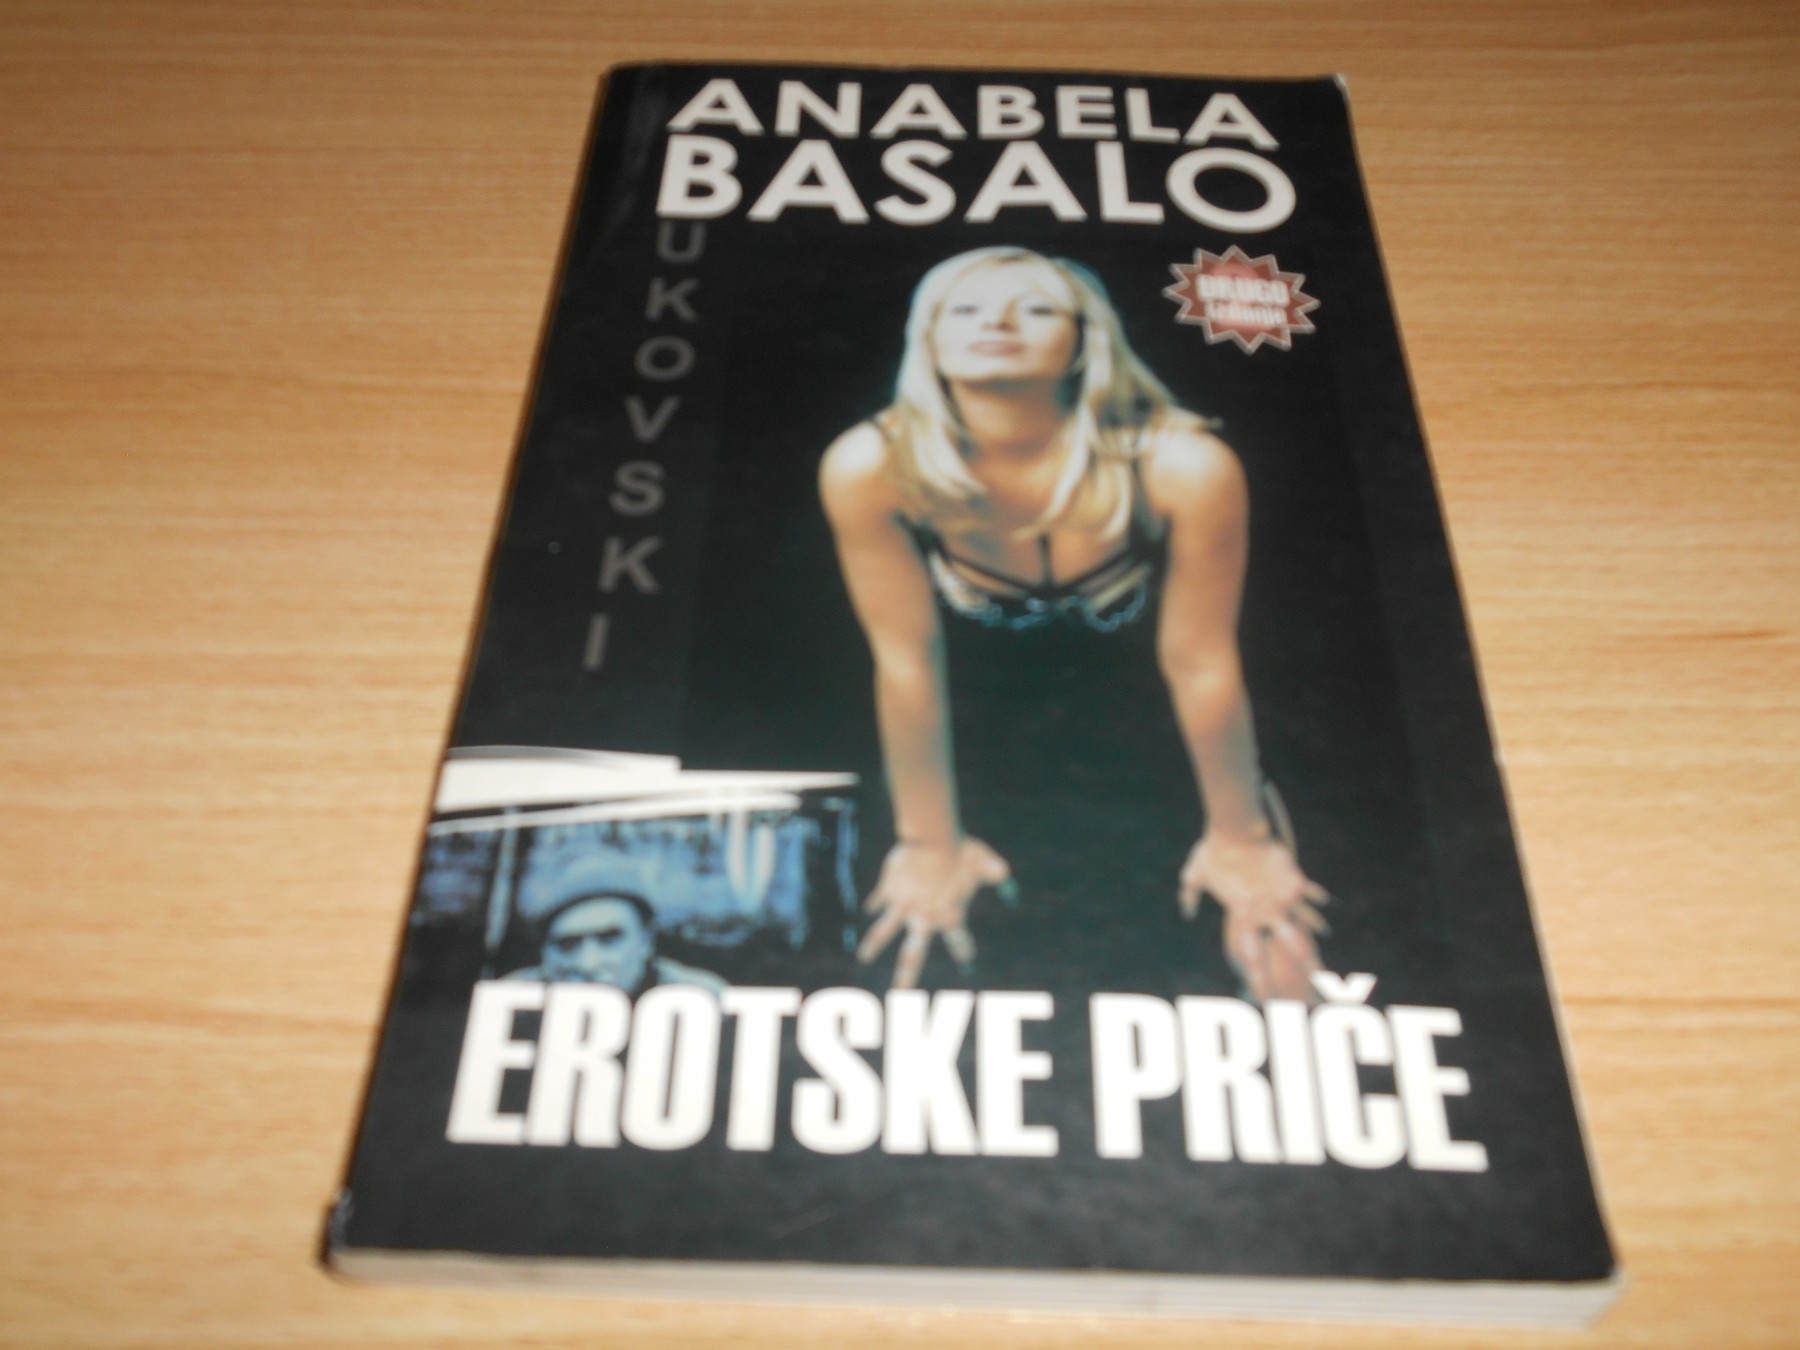 Anabela basalo - erotske priče.